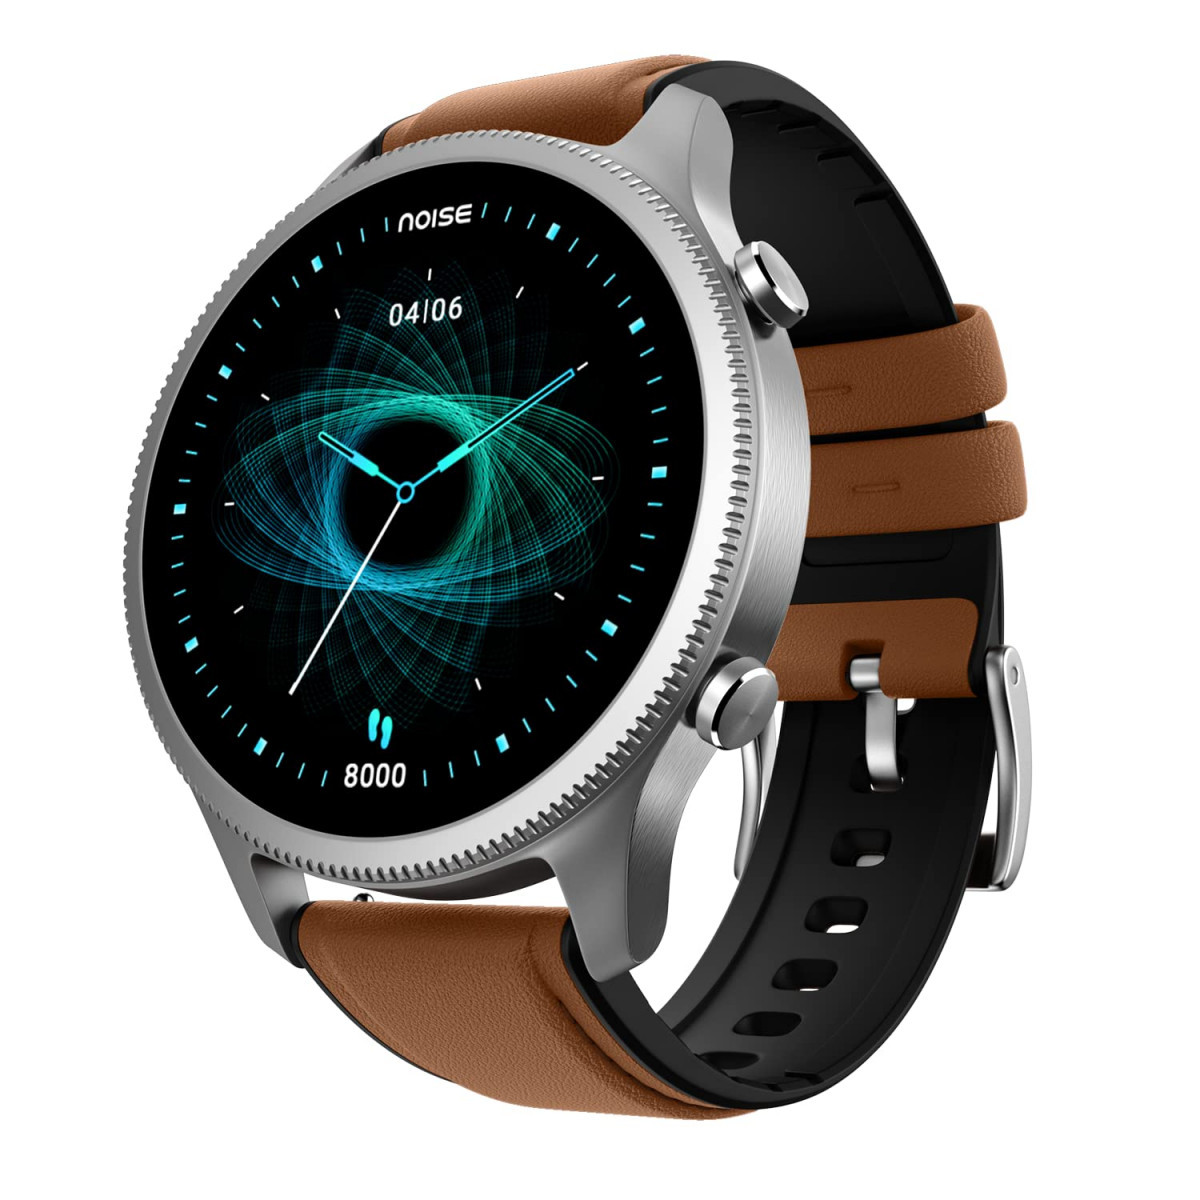 NoiseFit Halo 143 AMOLED Display Bluetooth Calling Round Dial Smart Watch Premium Metallic Build